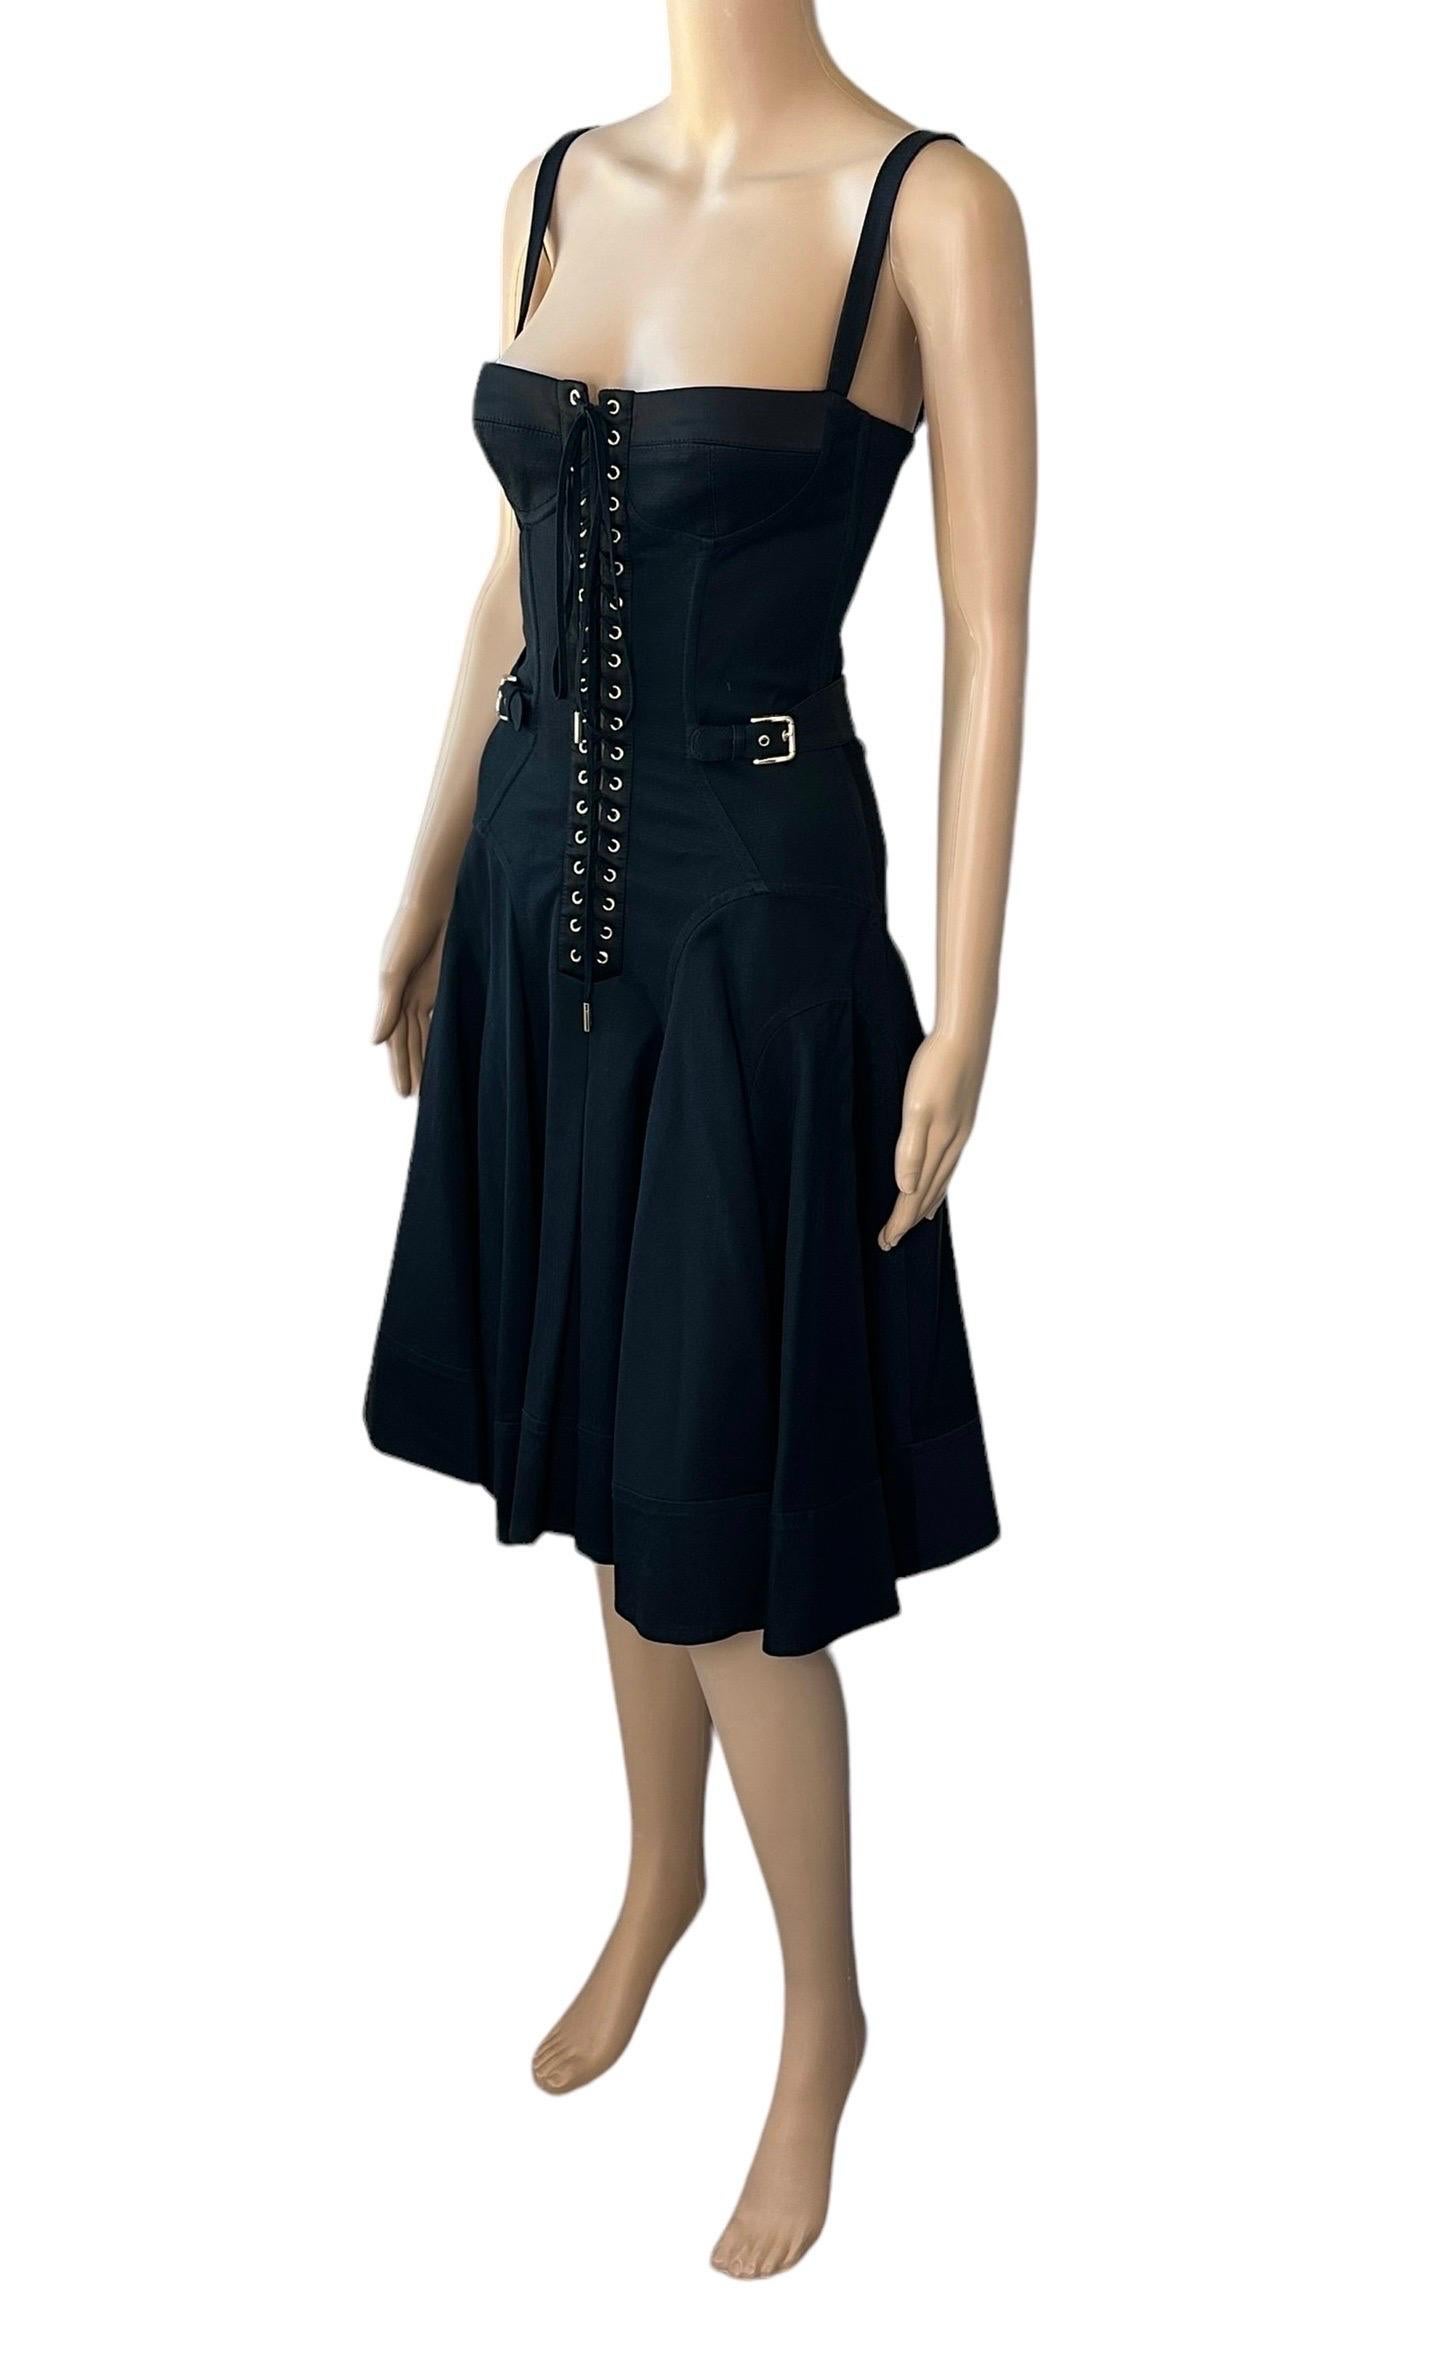 Dolce & Gabbana S/S 2007 Unworn Corset Lace-Up Bustier Black Dress For Sale 1